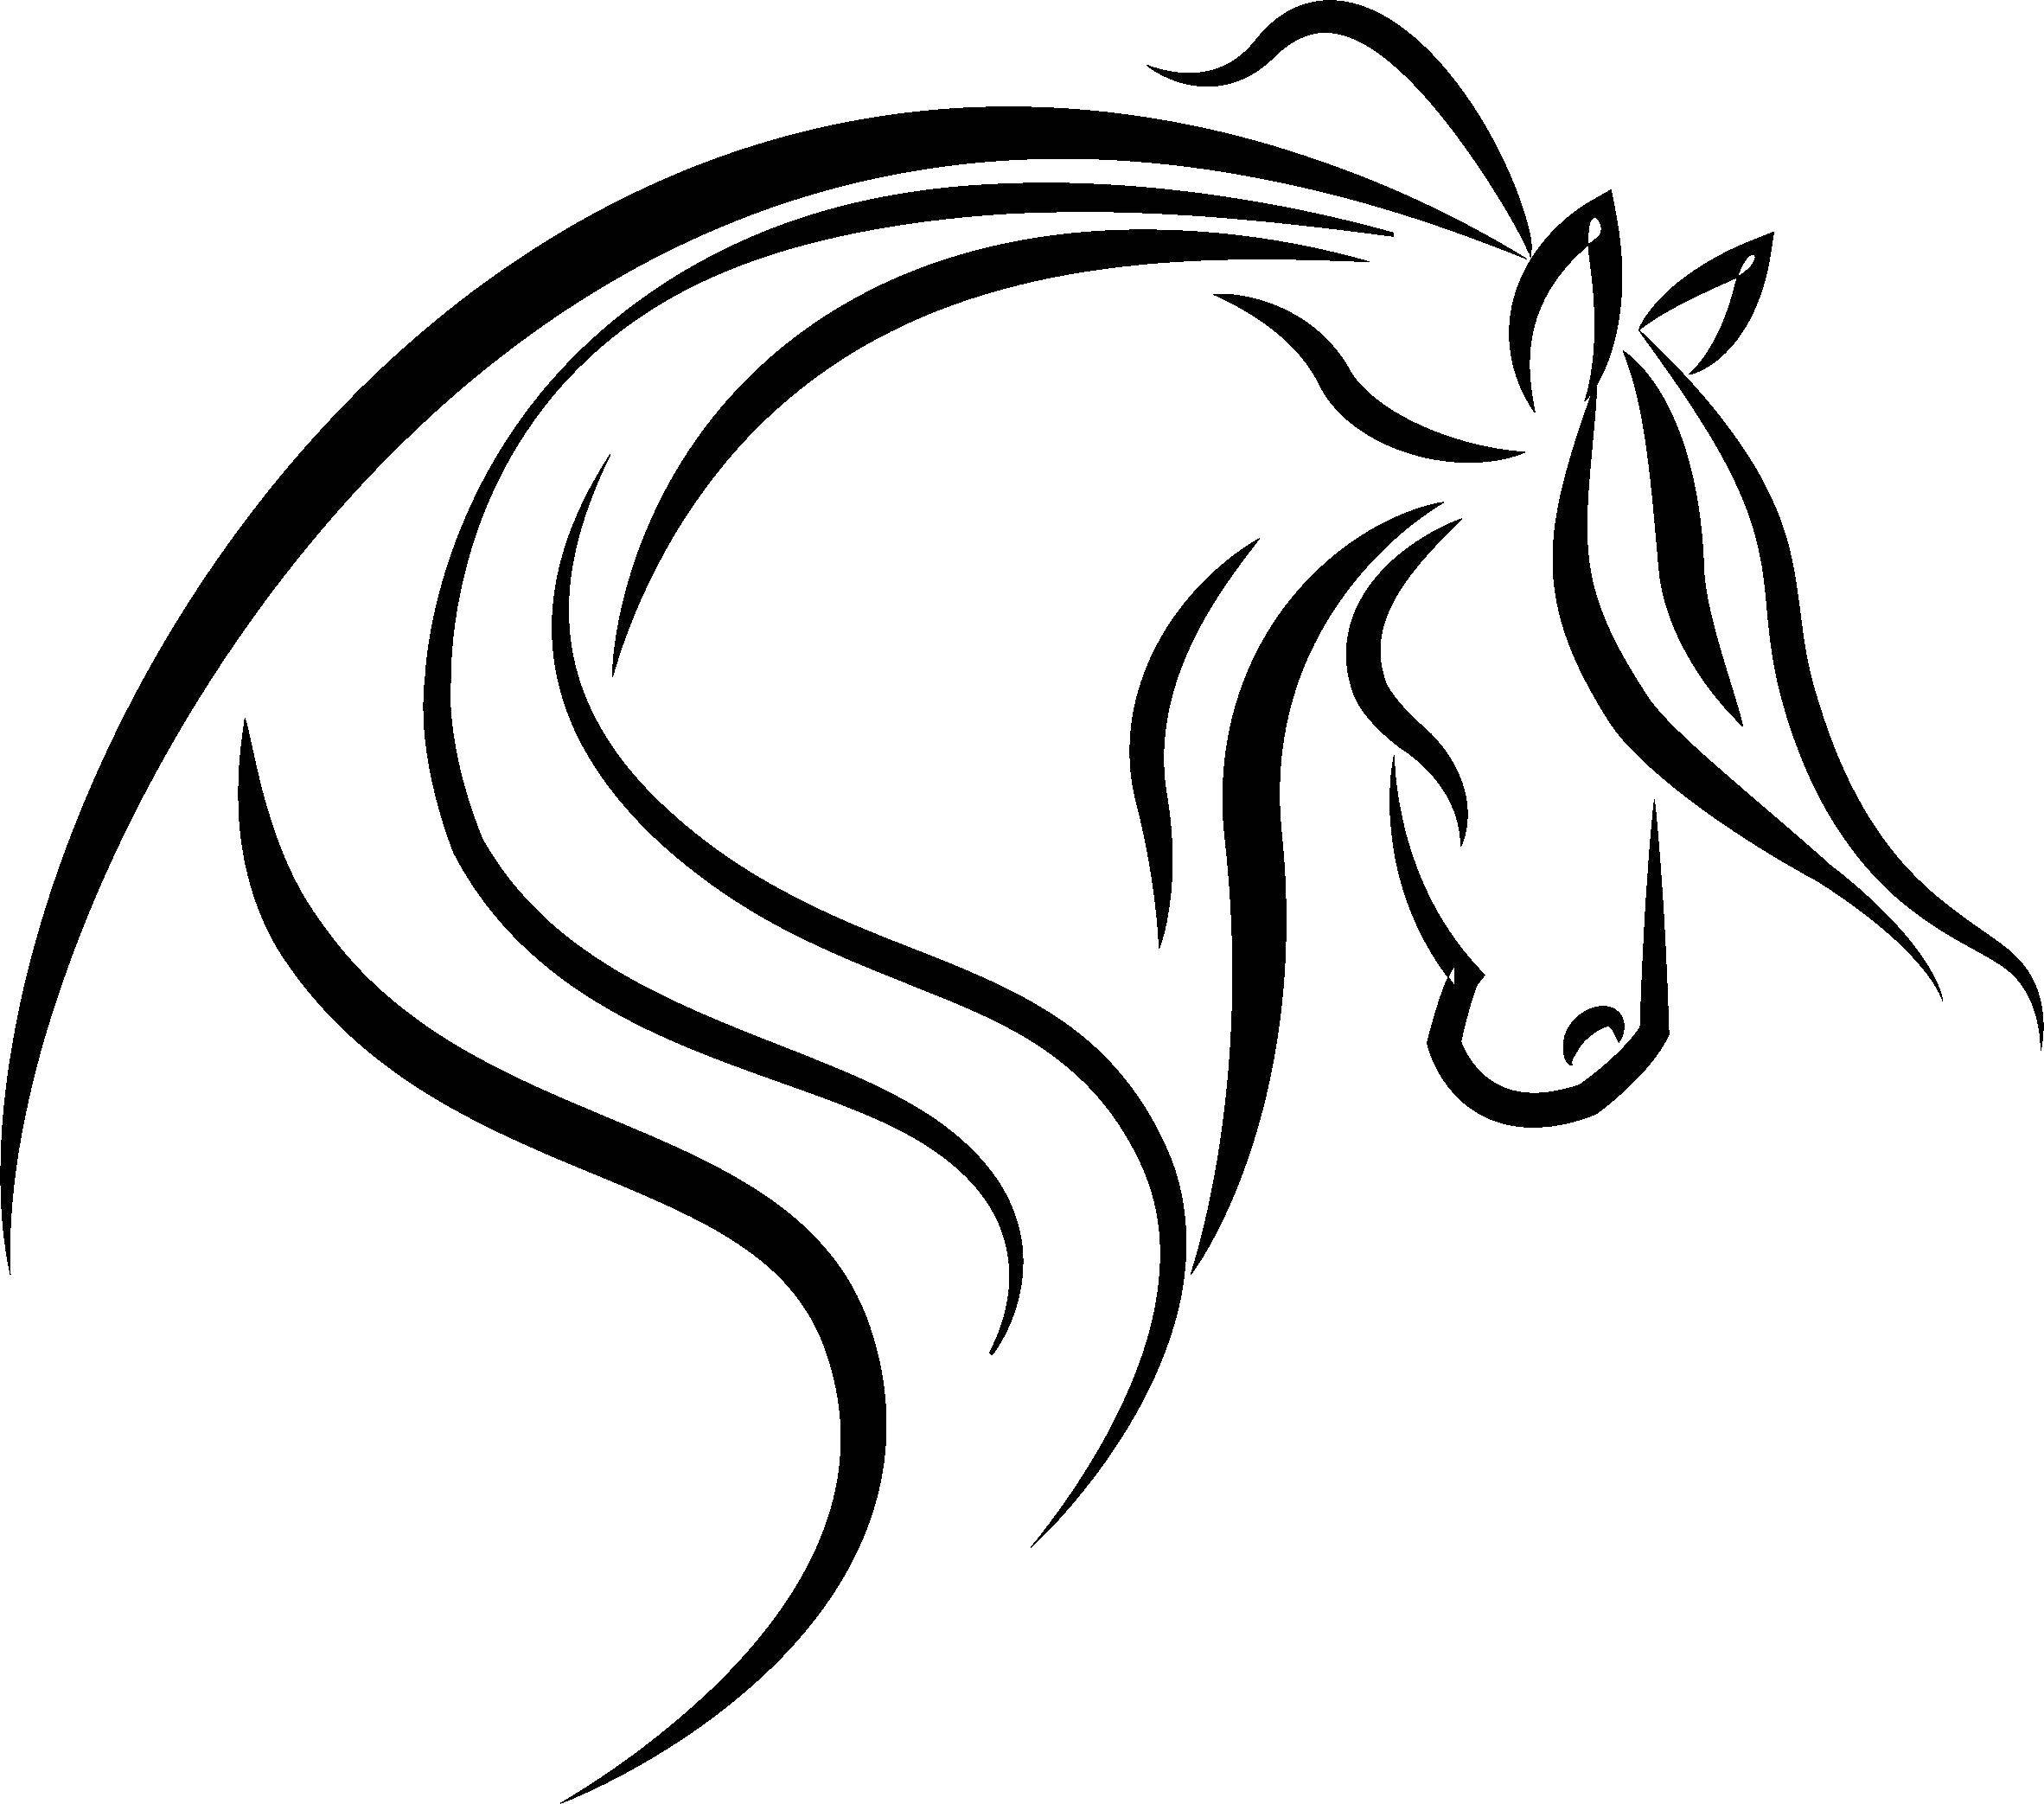 Название: Раскраска Контур лошади. Категория: контуры лошади. Теги: Контур, лошадь.